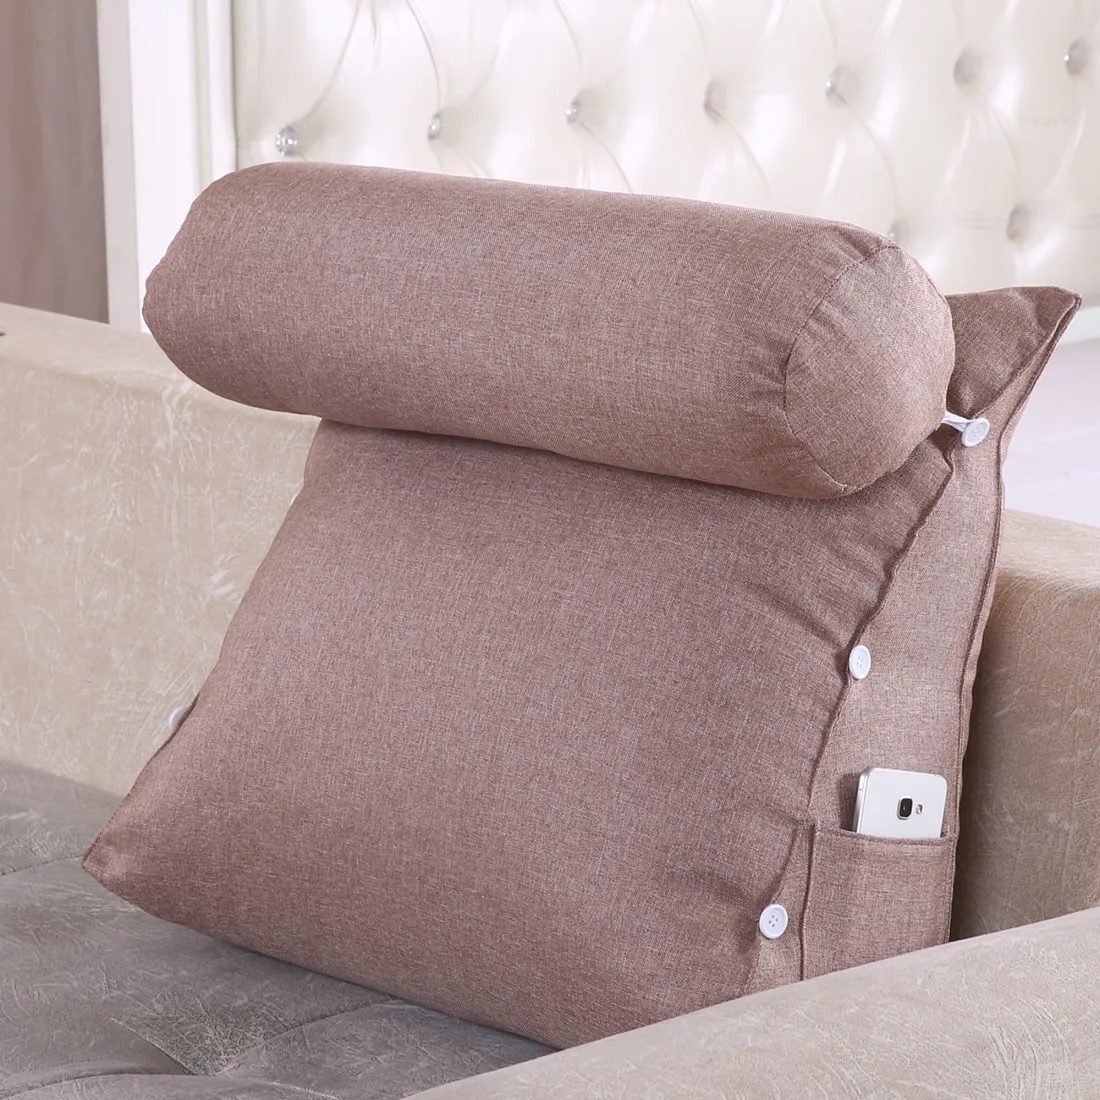 

Johnear Reading pillow wedge lumbar support cushion headboard removable back rest pillows bolster triangular backrest inclined